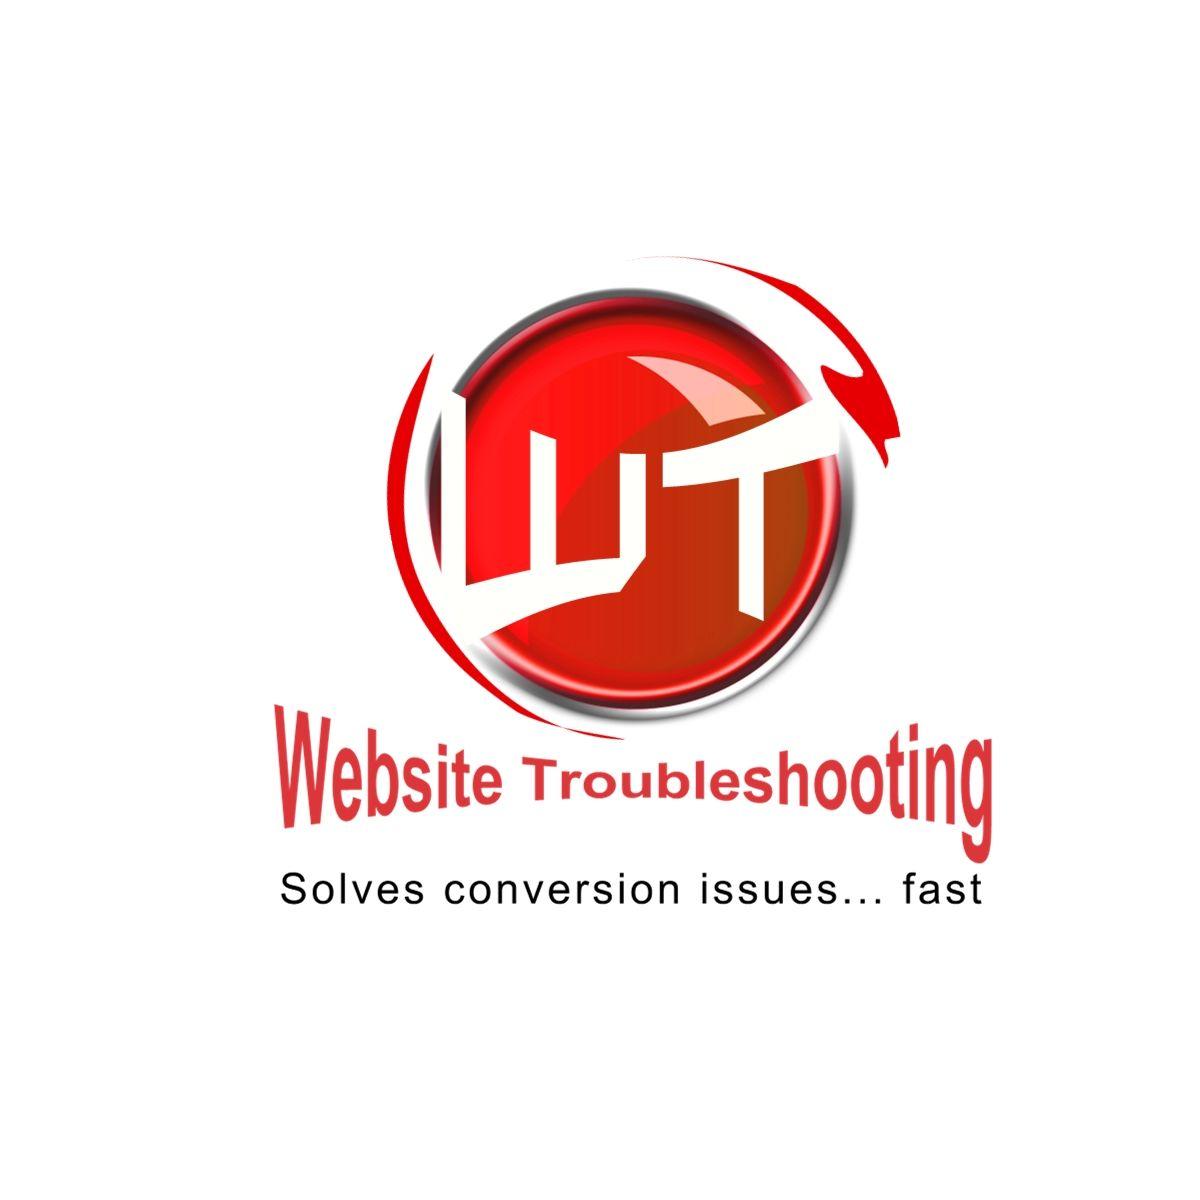 Burra Logo - Logo Design for website troubleshooting solves conversion issues